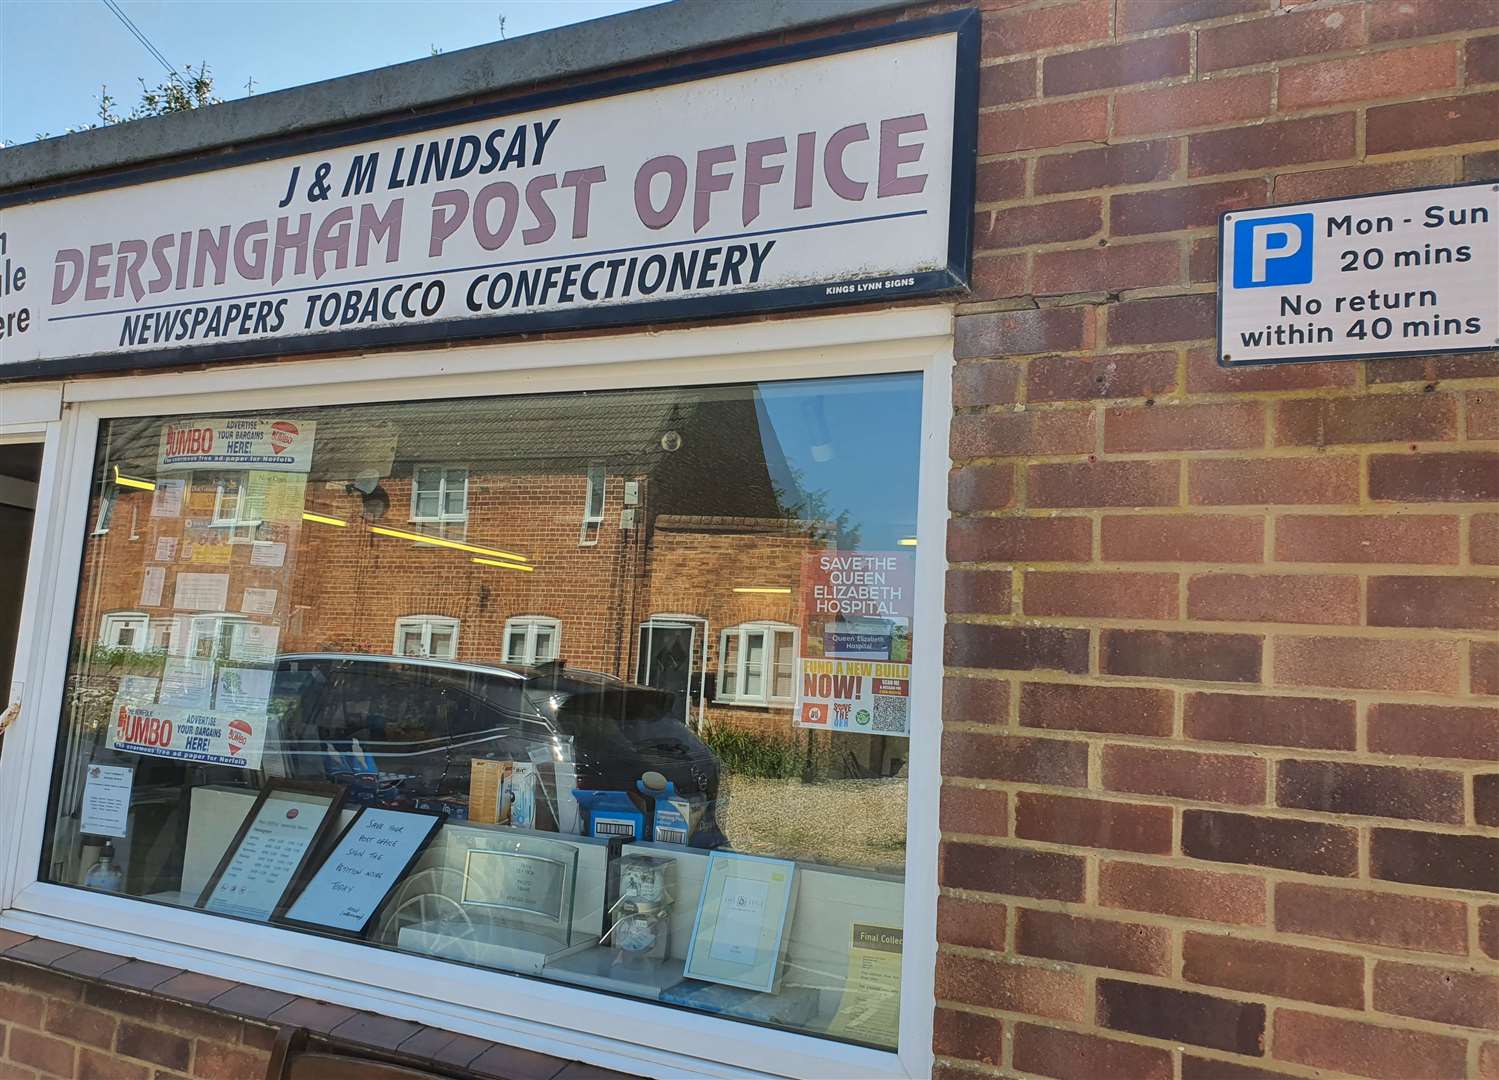 Dersingham Post Office serves as a community hub for many residents